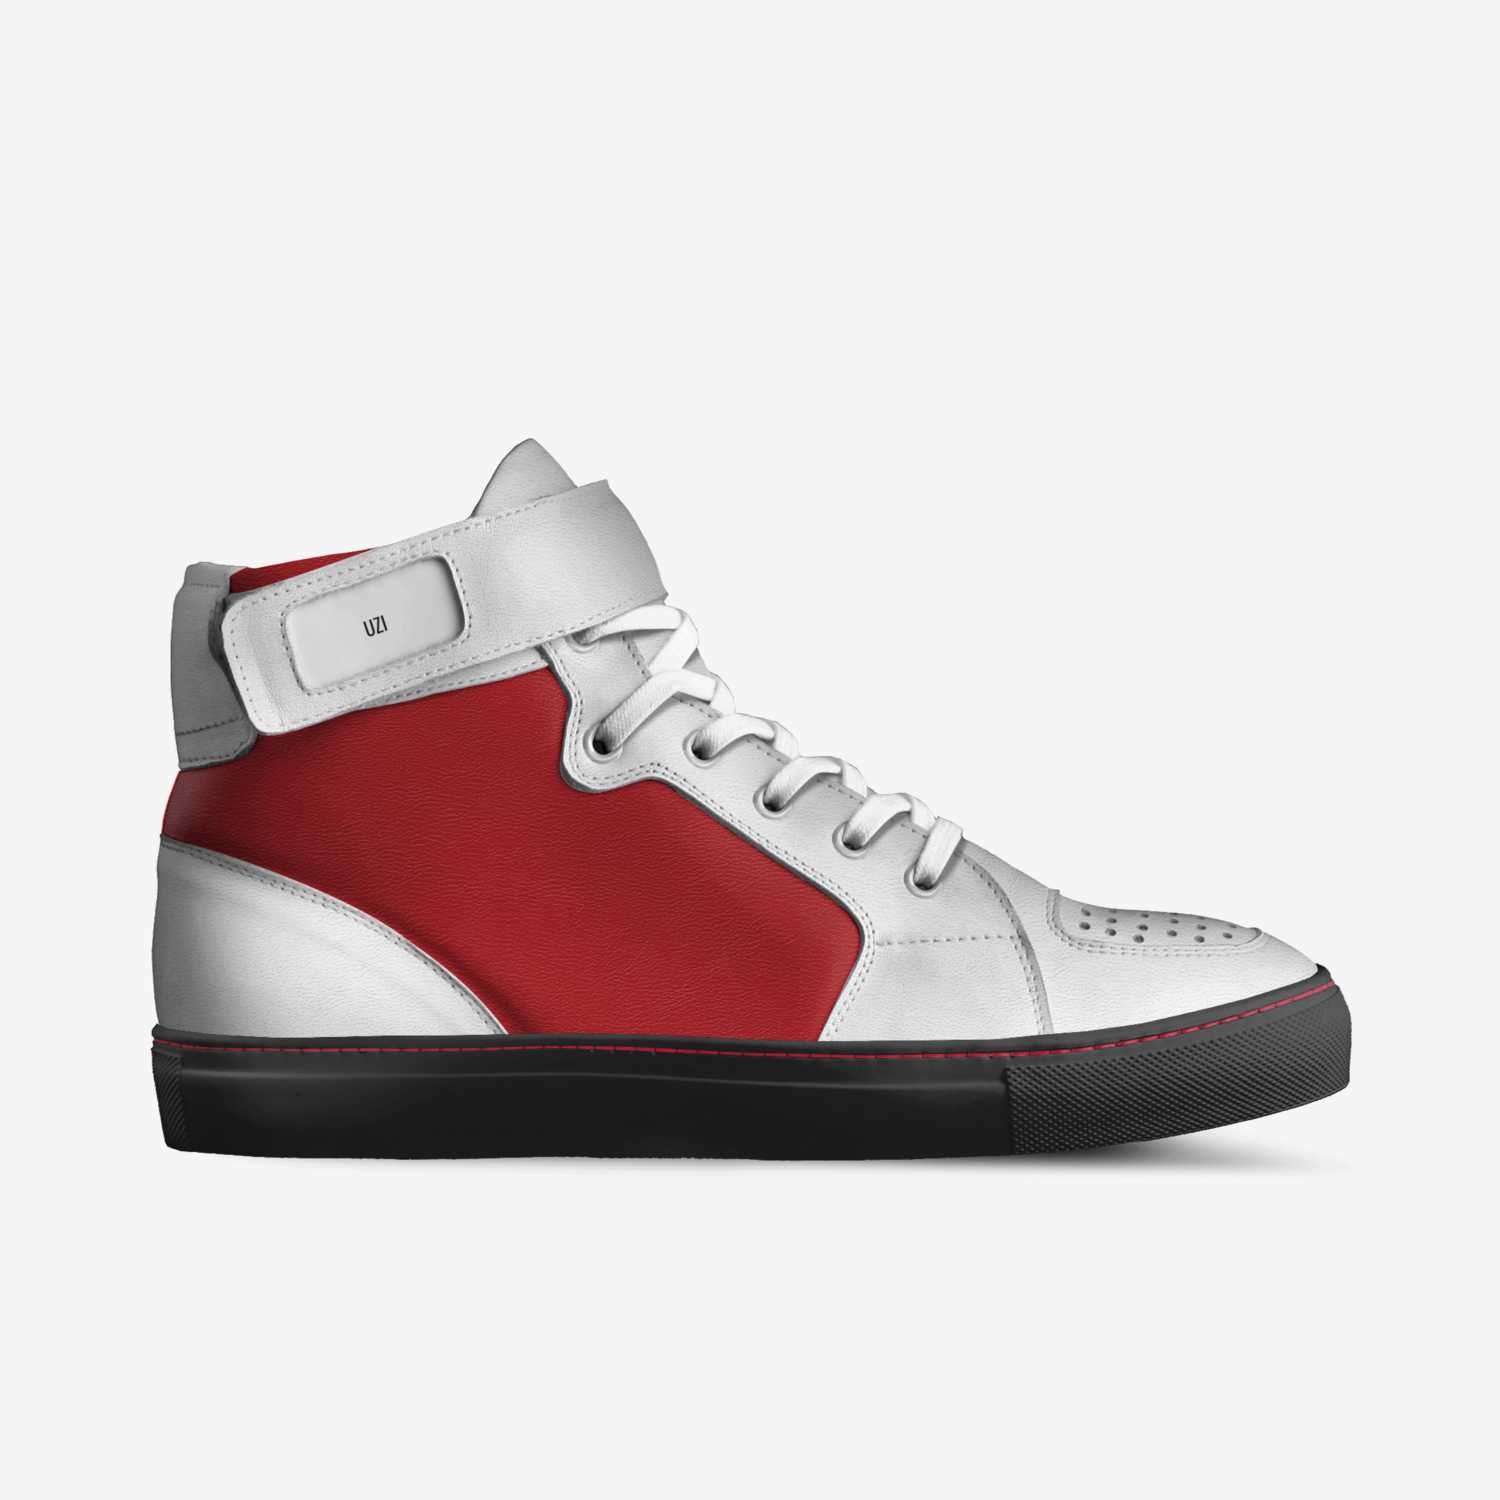 uzi | A Custom Shoe concept by Anthony Corsentino